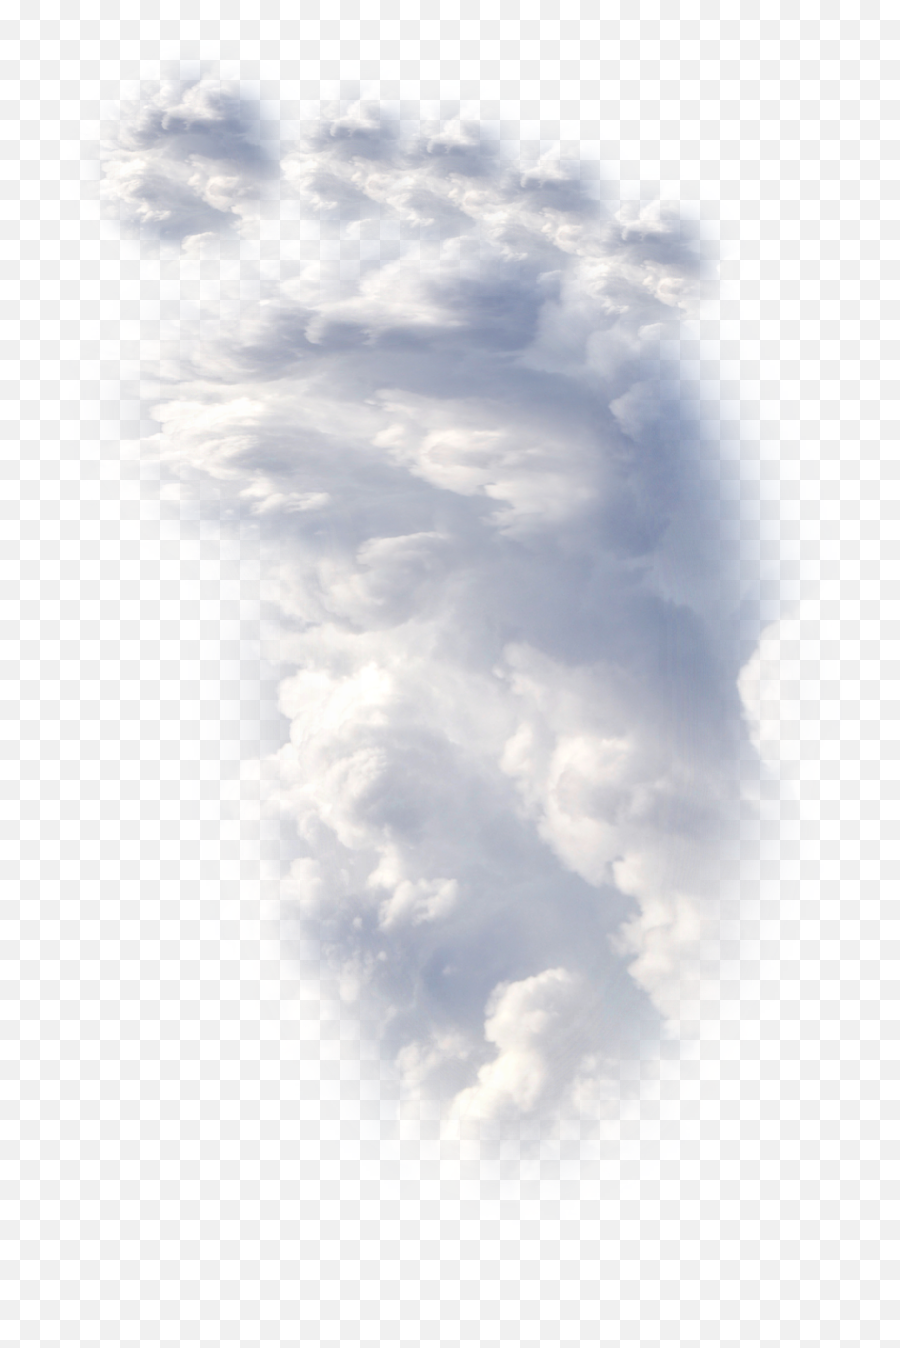 Download Free Photo Of Isolatedcloudskynatureblue - From Emoji,Smoke Cloud Transparent